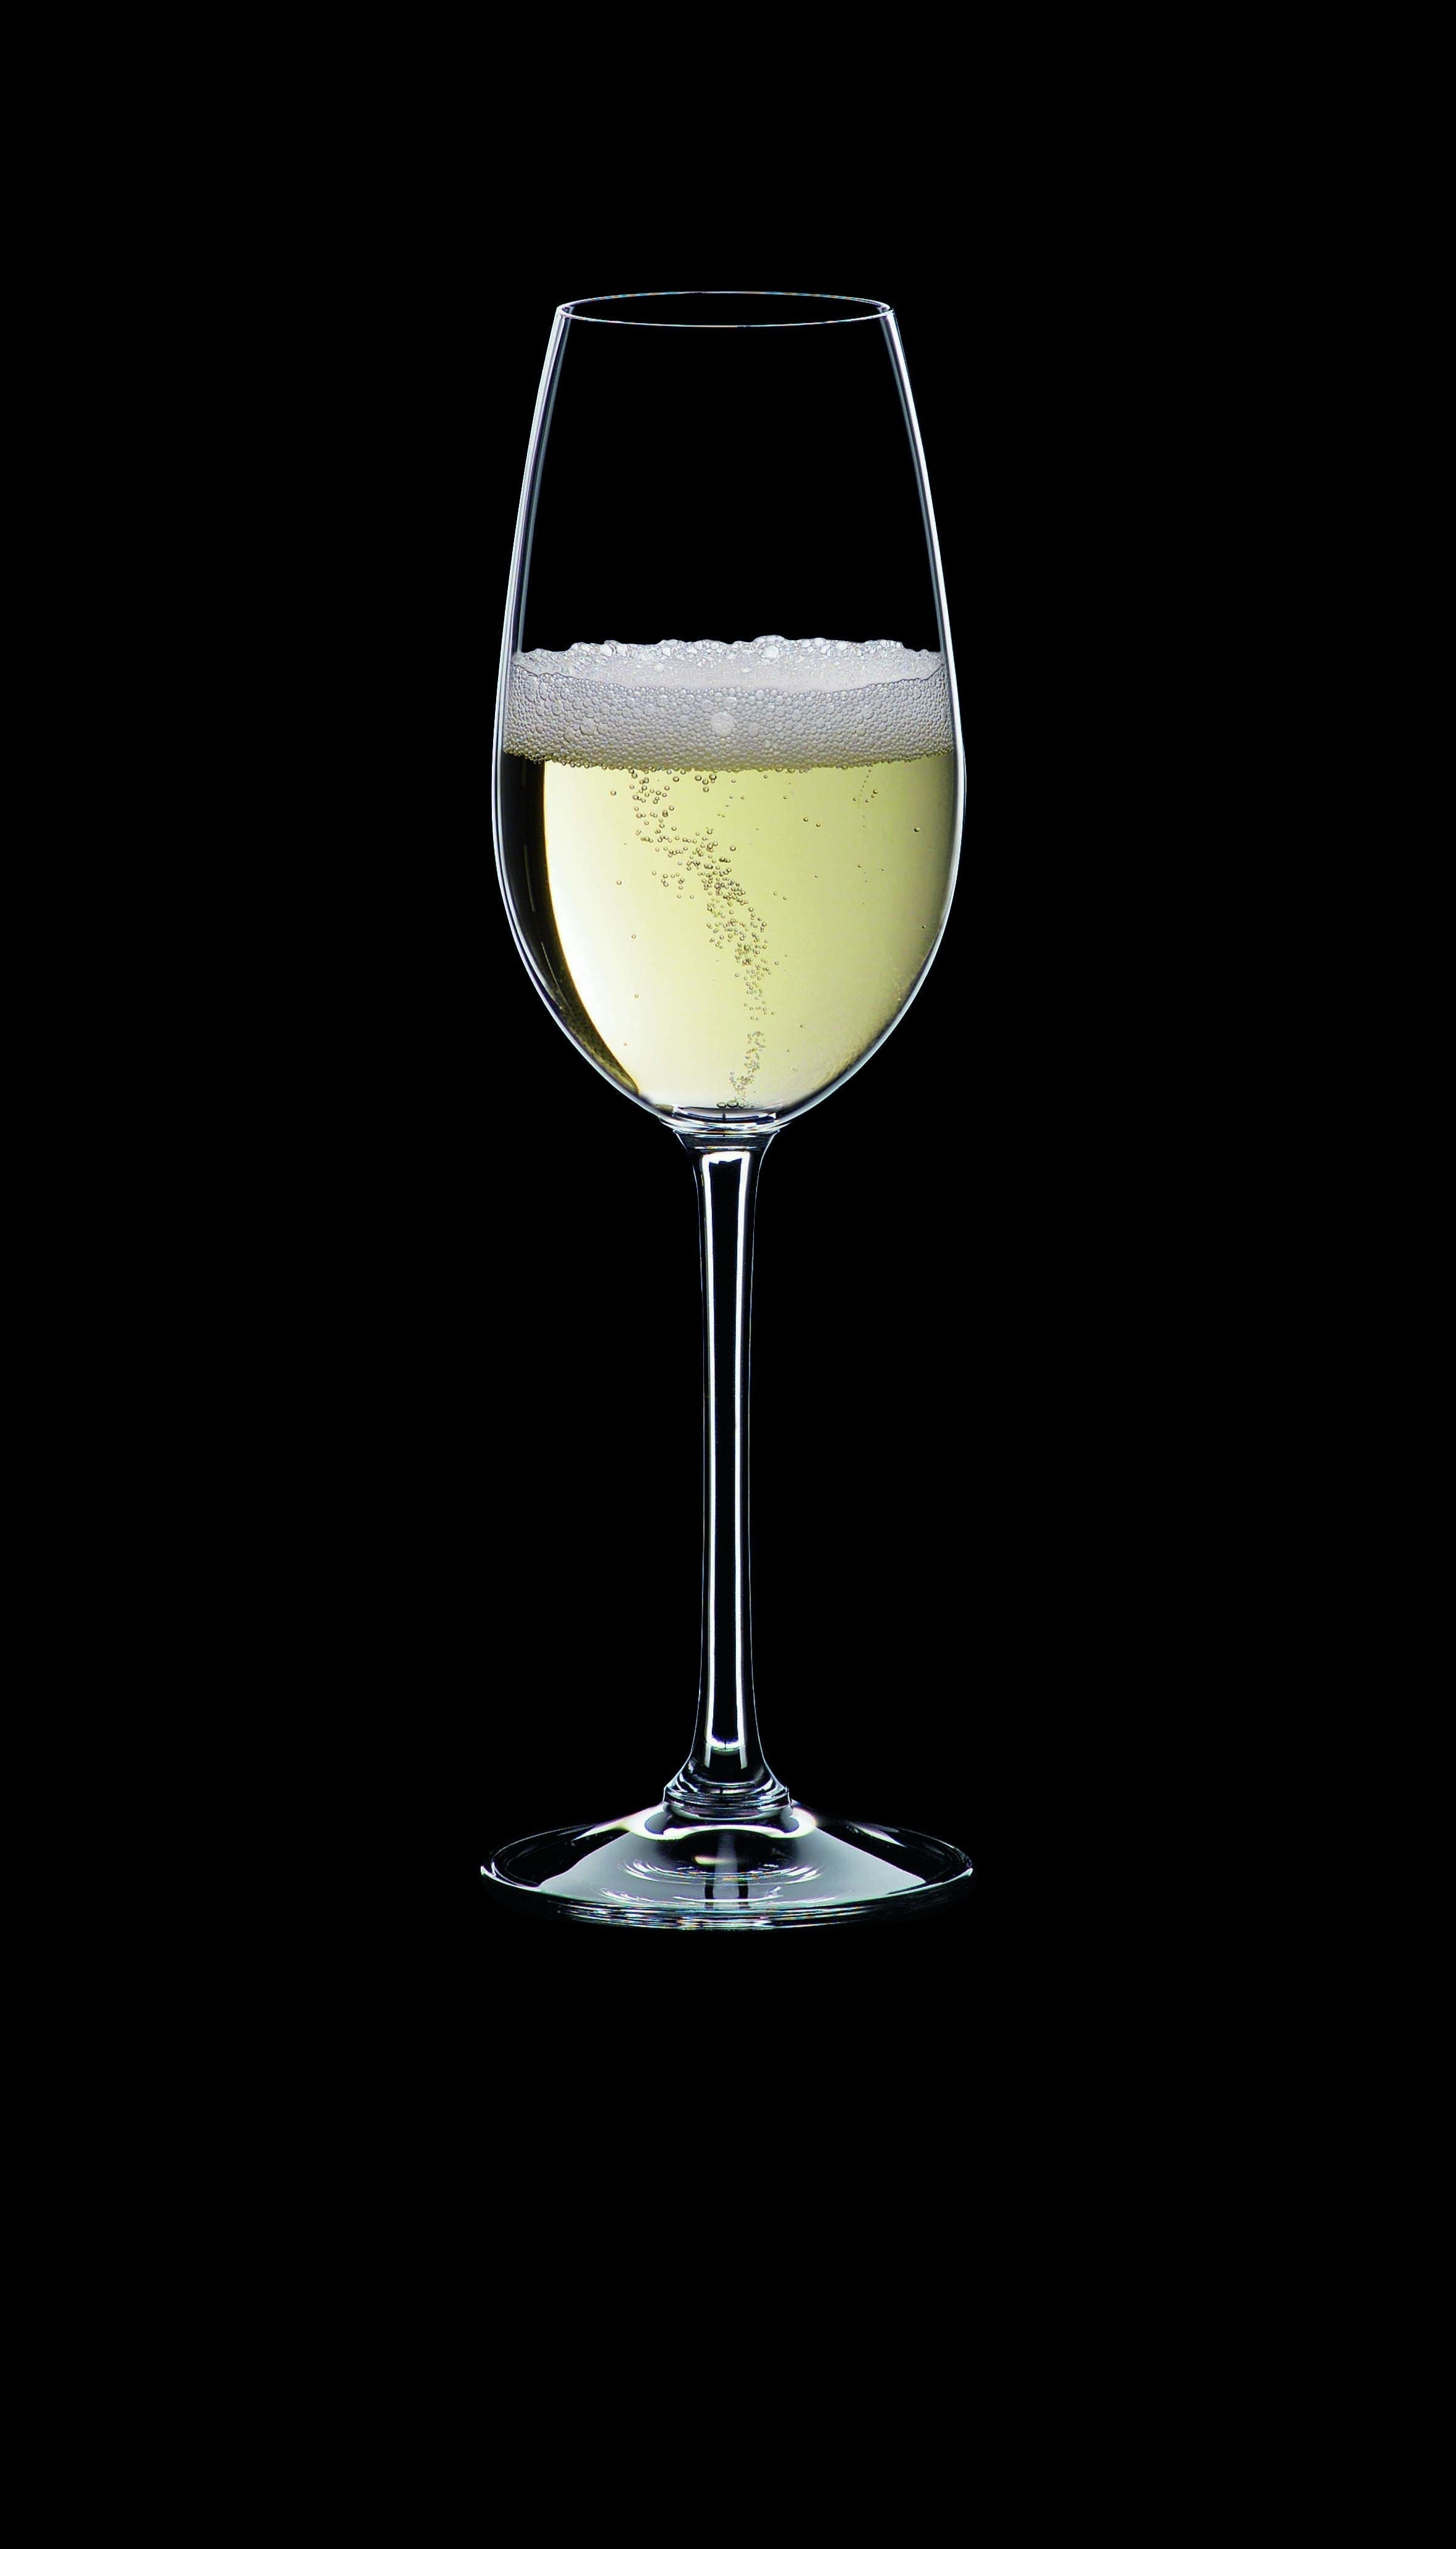 Nachtmann Vi Vino Champagner Glas 260 ml, Satz von 4